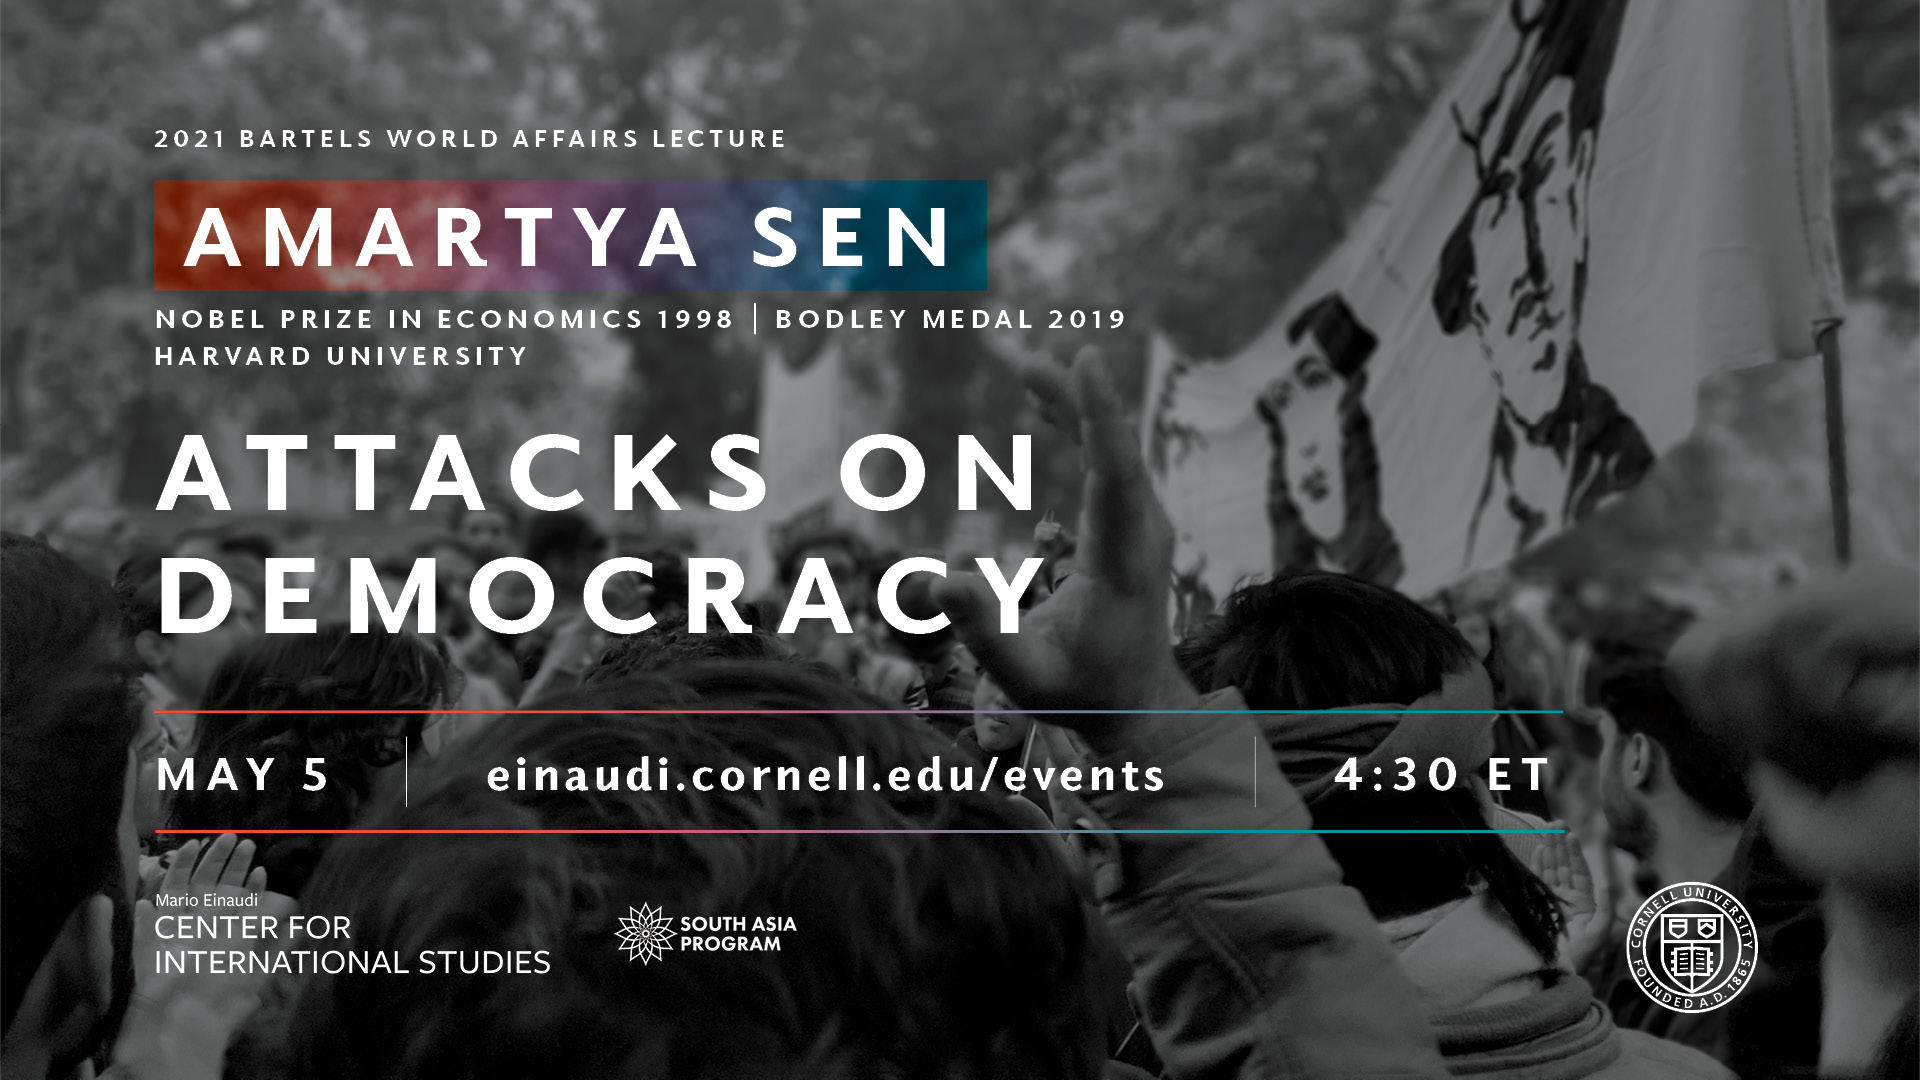 2021 Bartels World Affairs Lecture: Amartya Sen, Attacks on Democracy